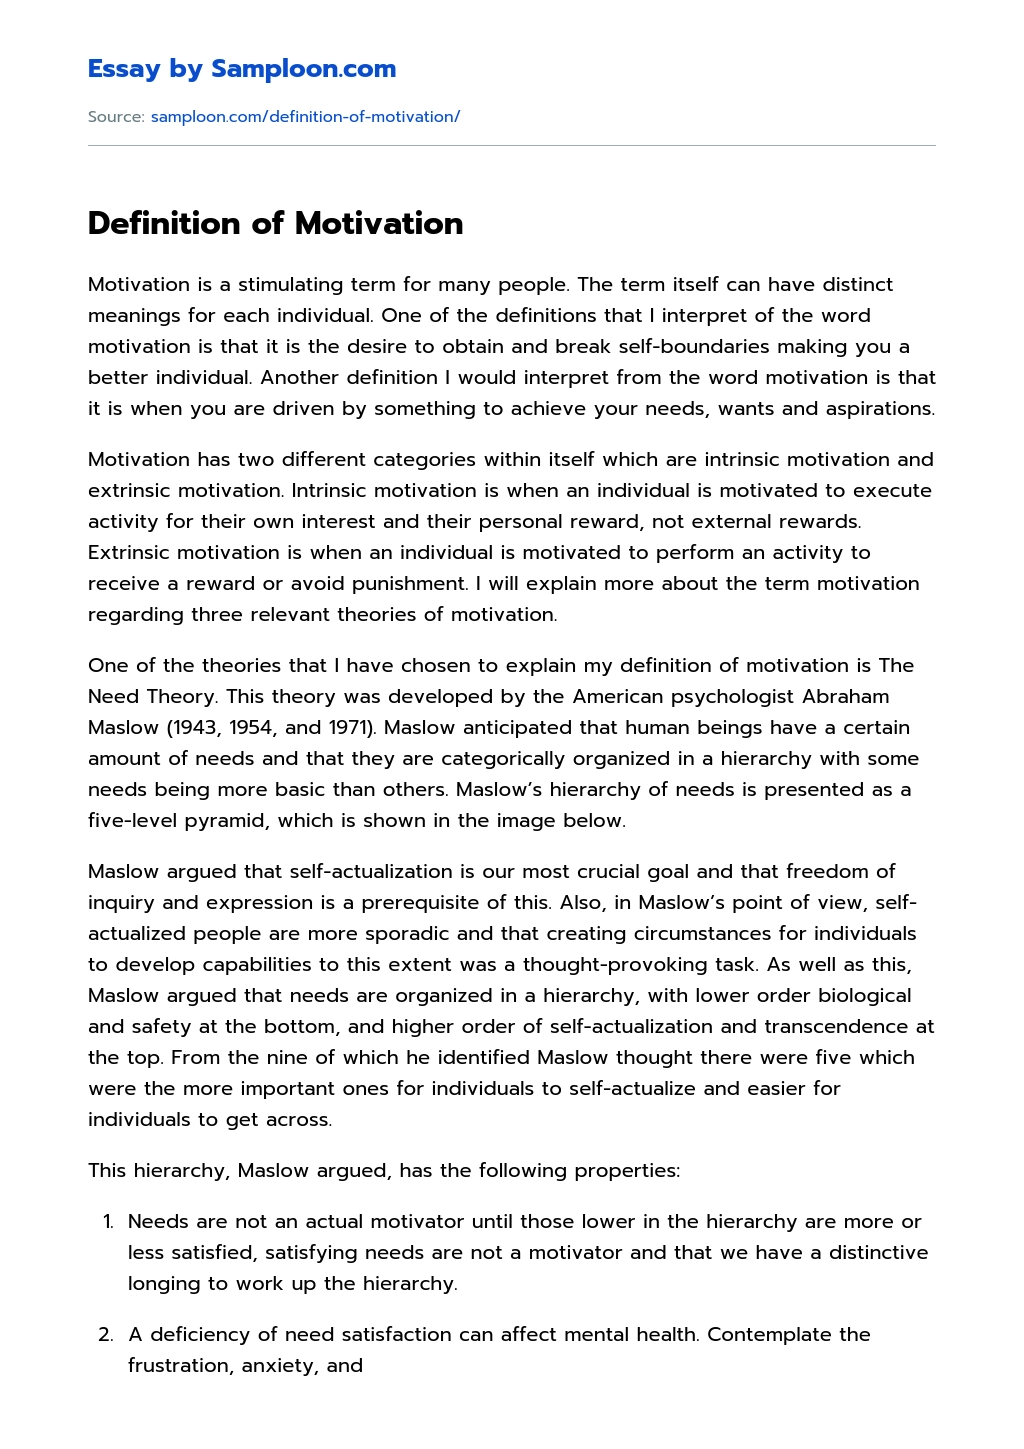 Definition of Motivation essay